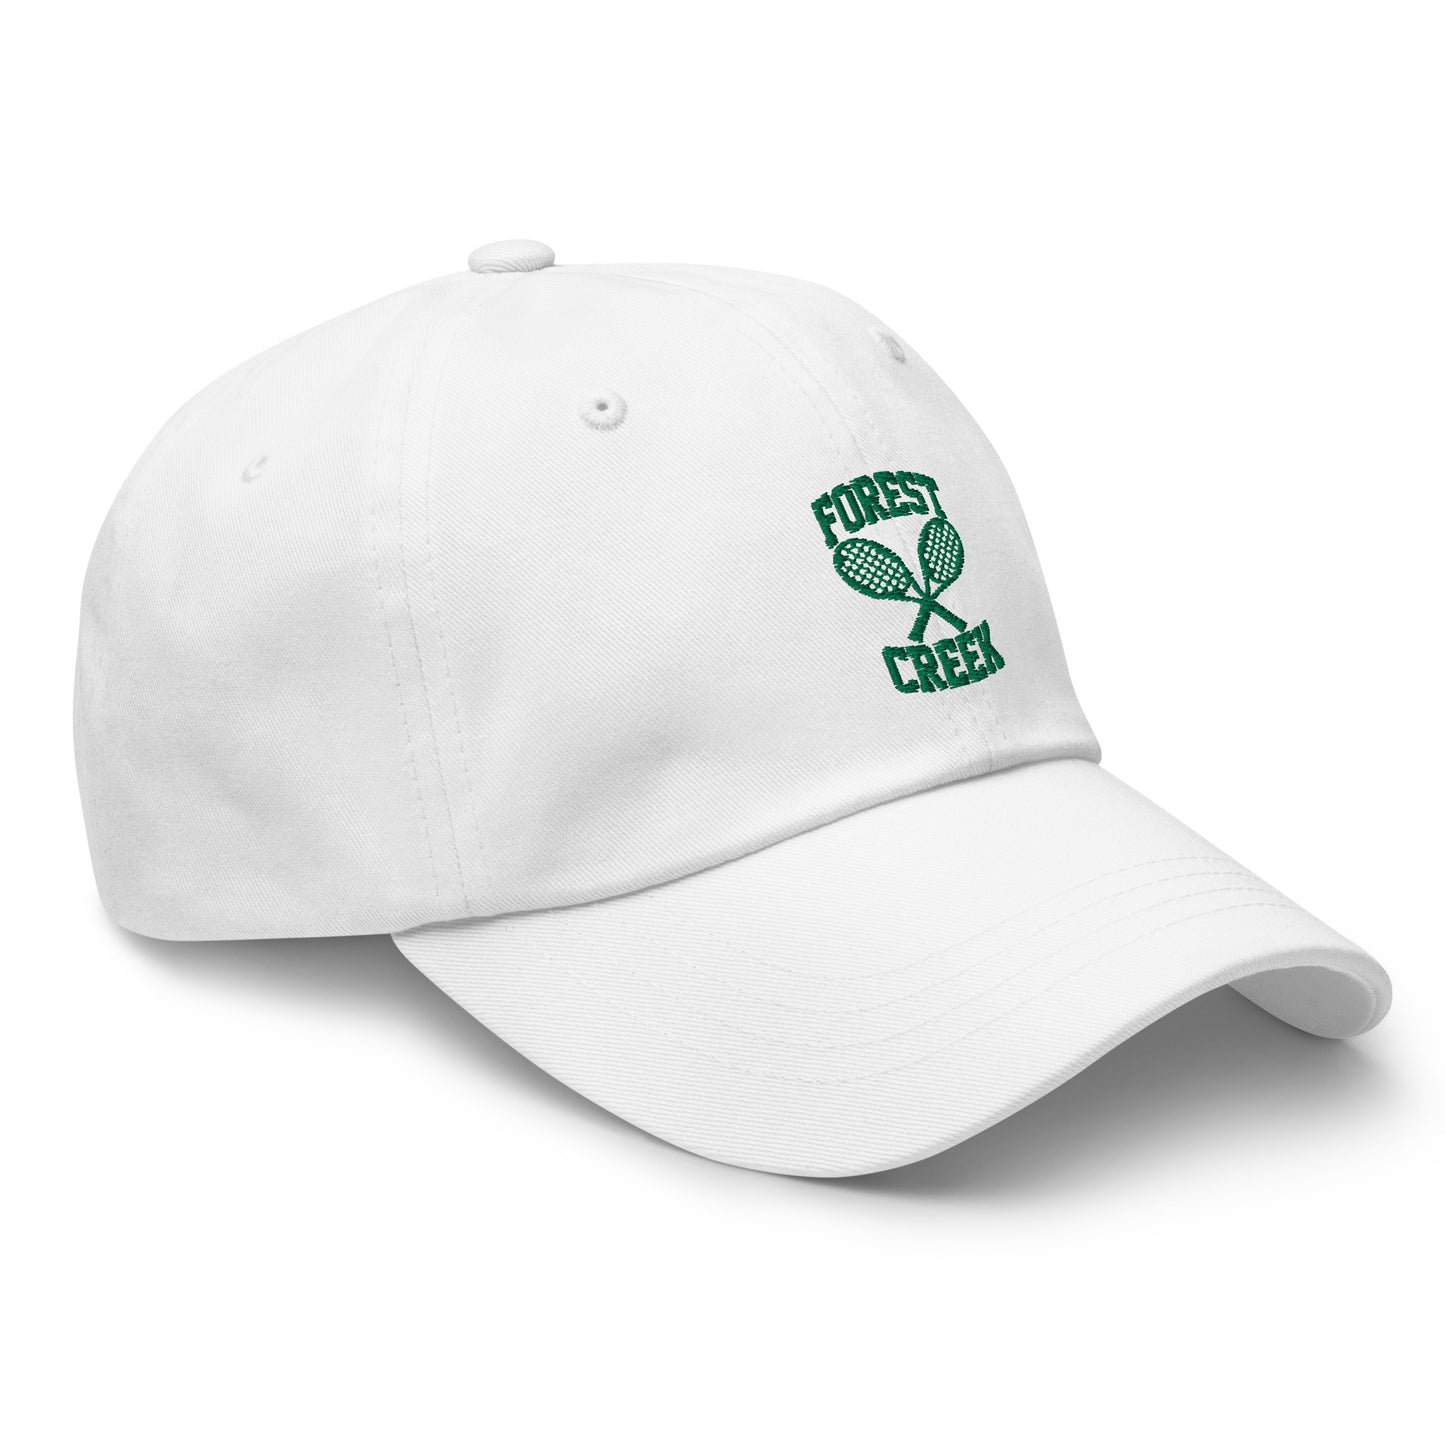 Forest Creek tennis team adjustable hat